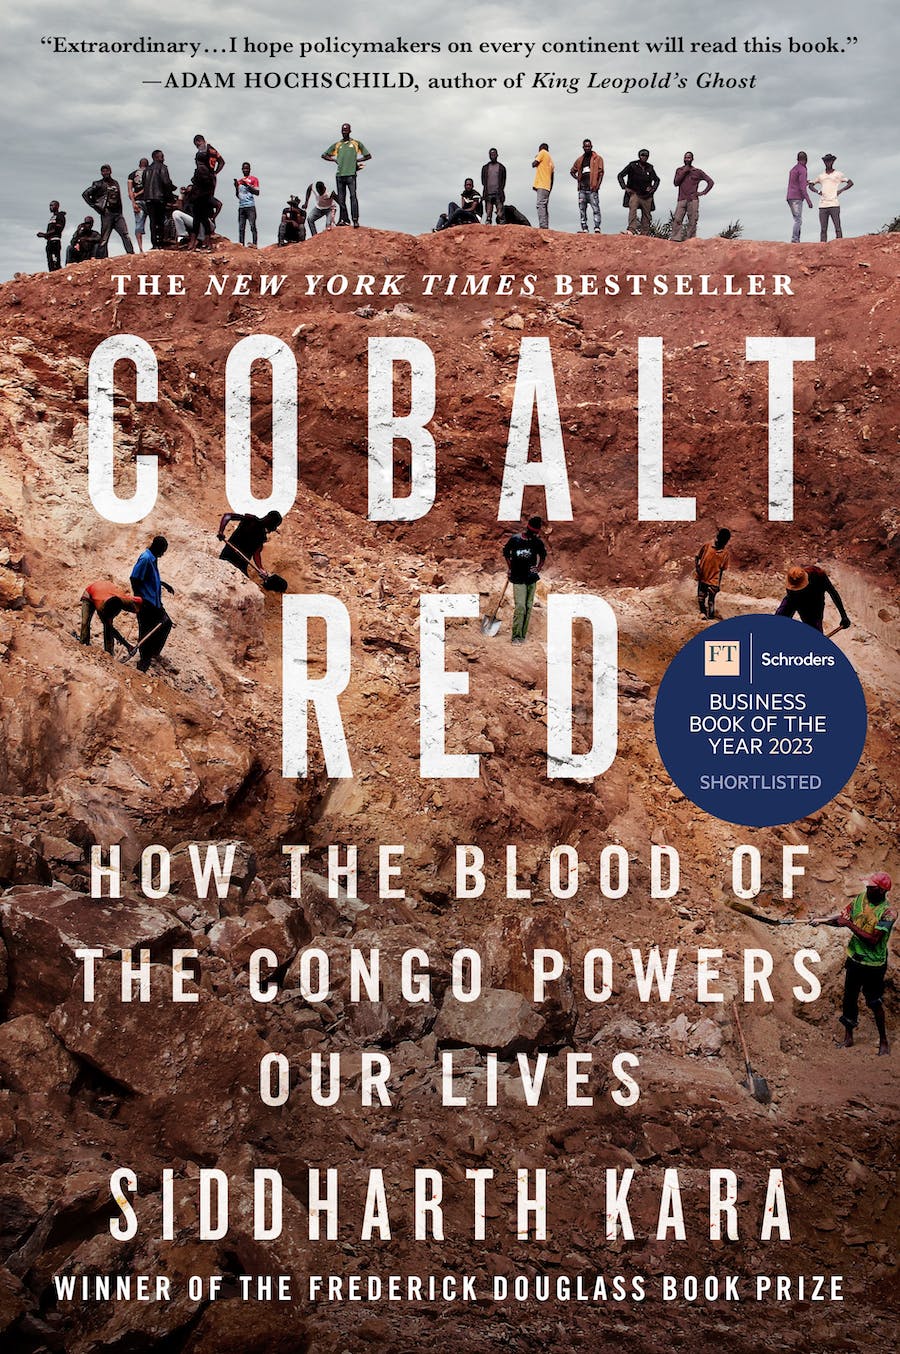 Siddharth Kara: Cobalt Red (2022, St. Martin's Press)